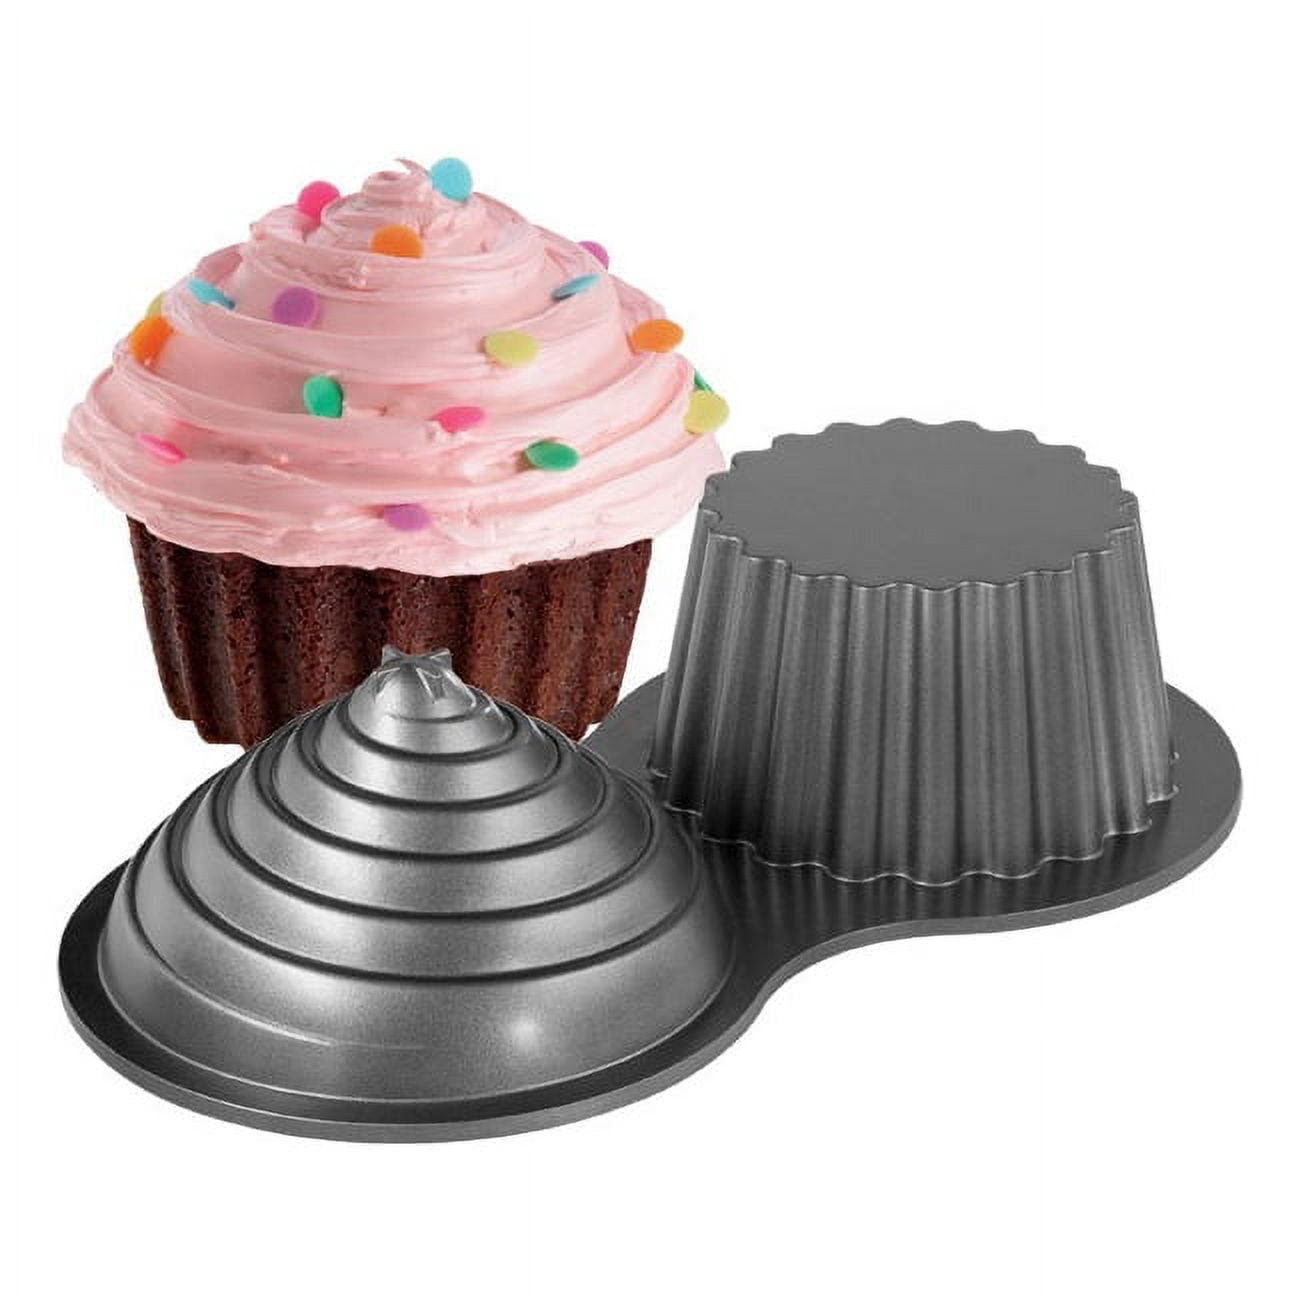 Giant Cupcake Cake — Food  Giant cupcake cakes, Big cupcake